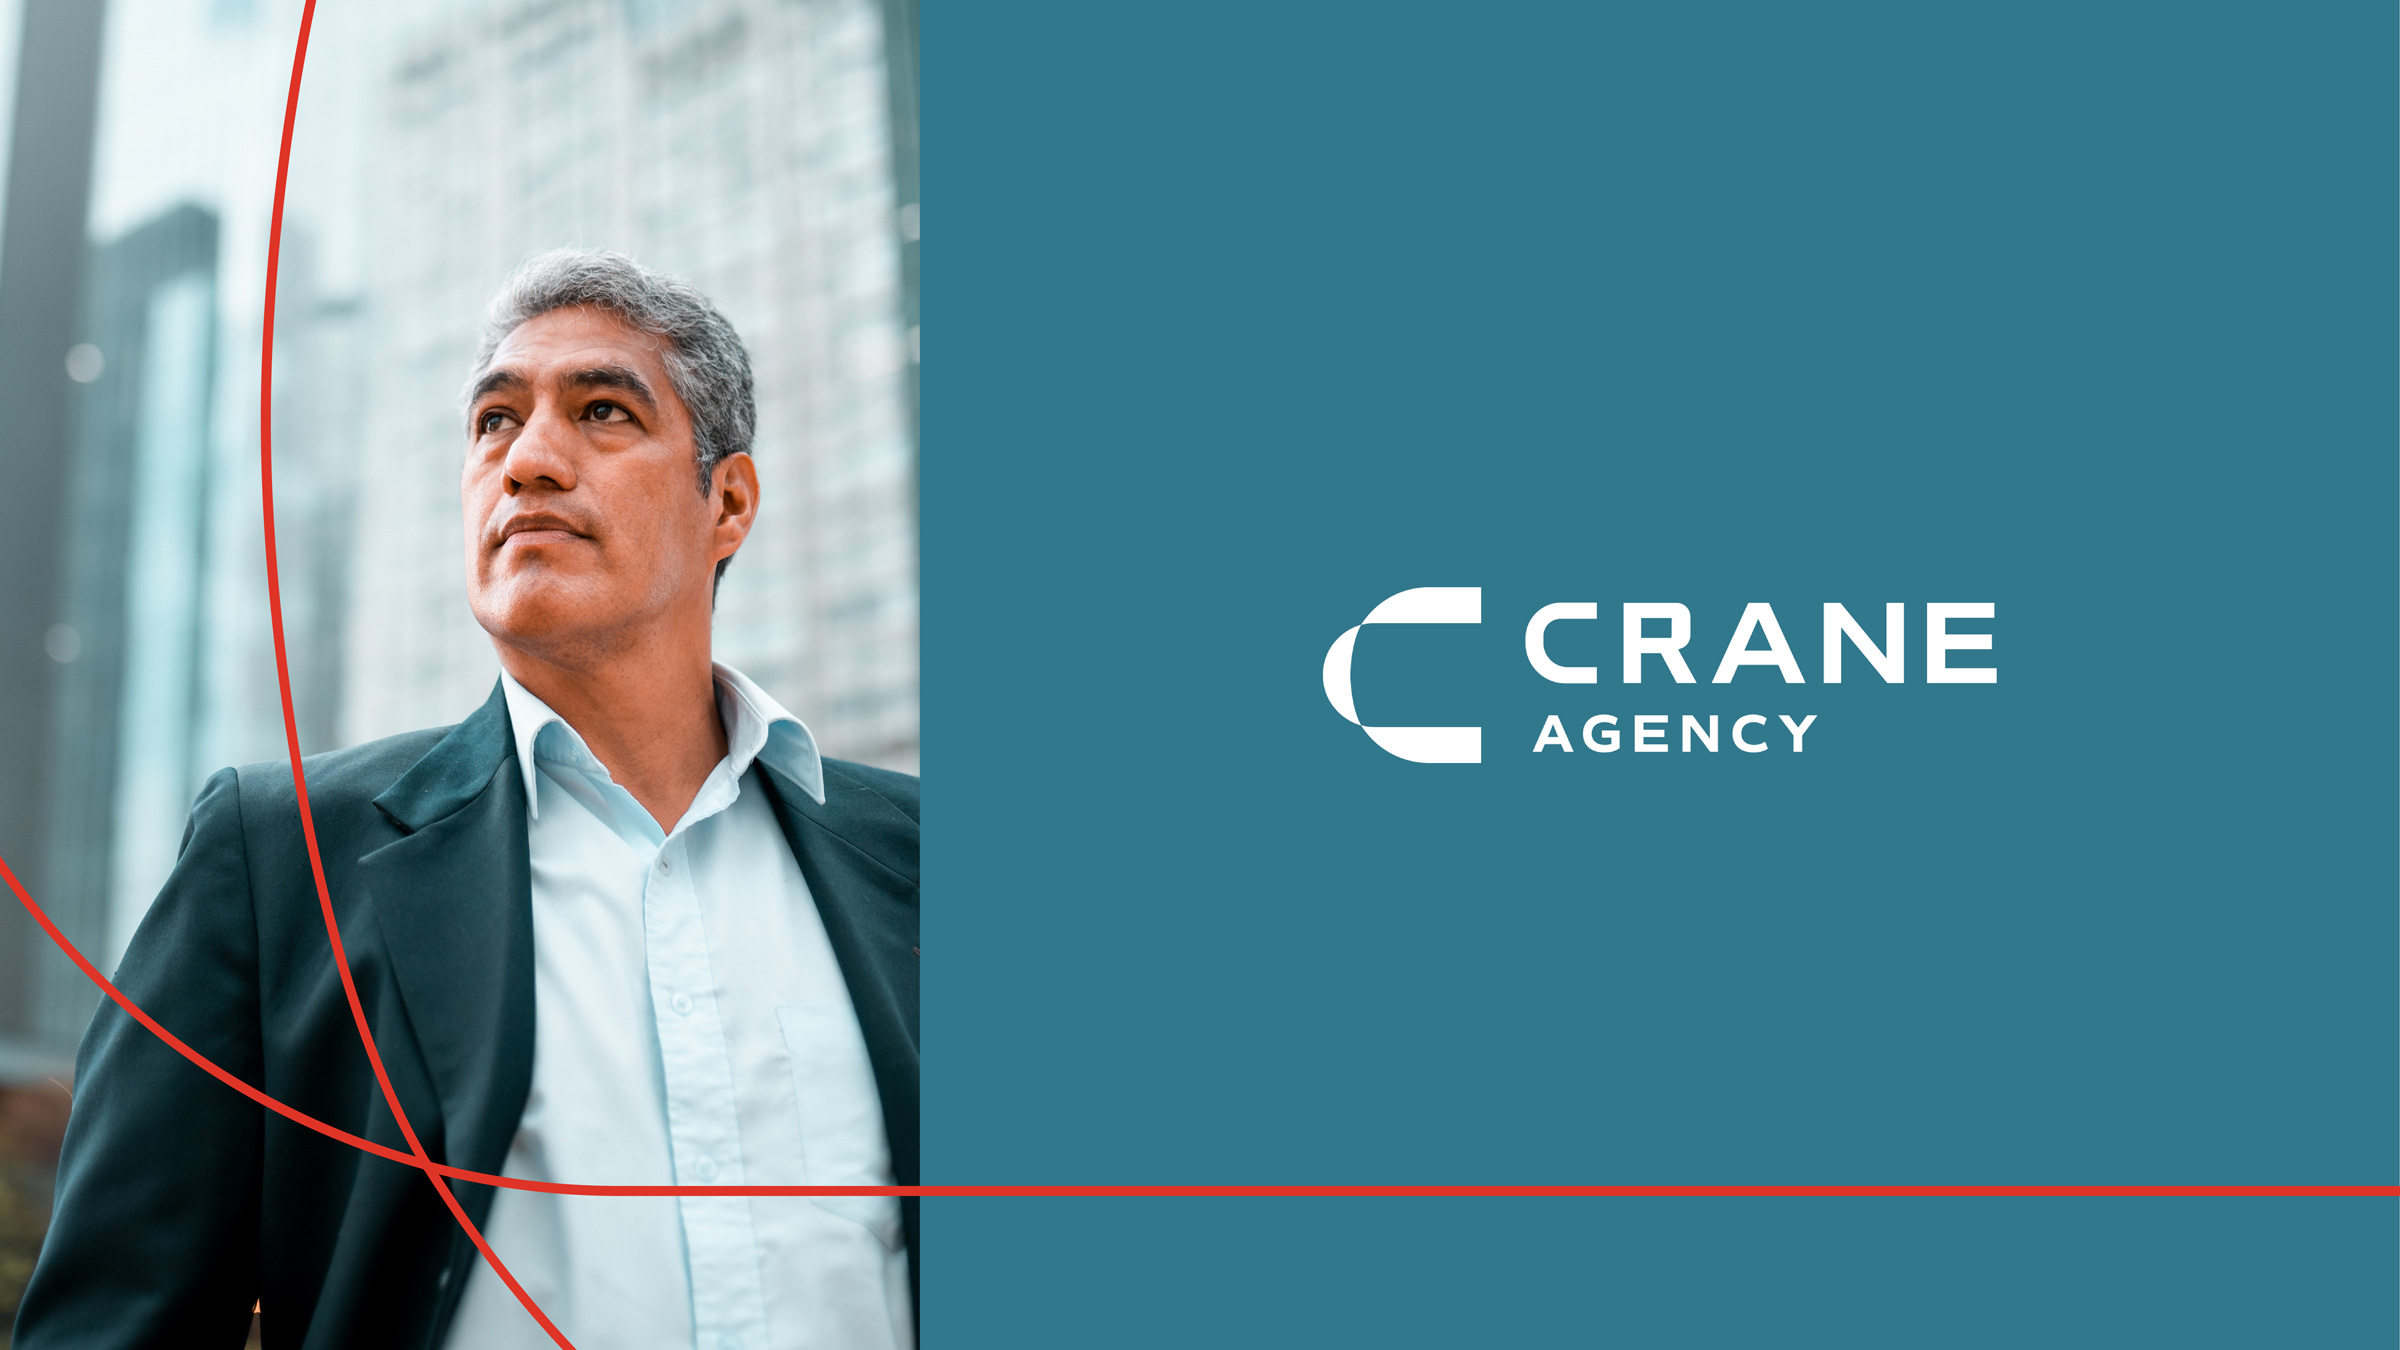 Crane Agency insurance branding